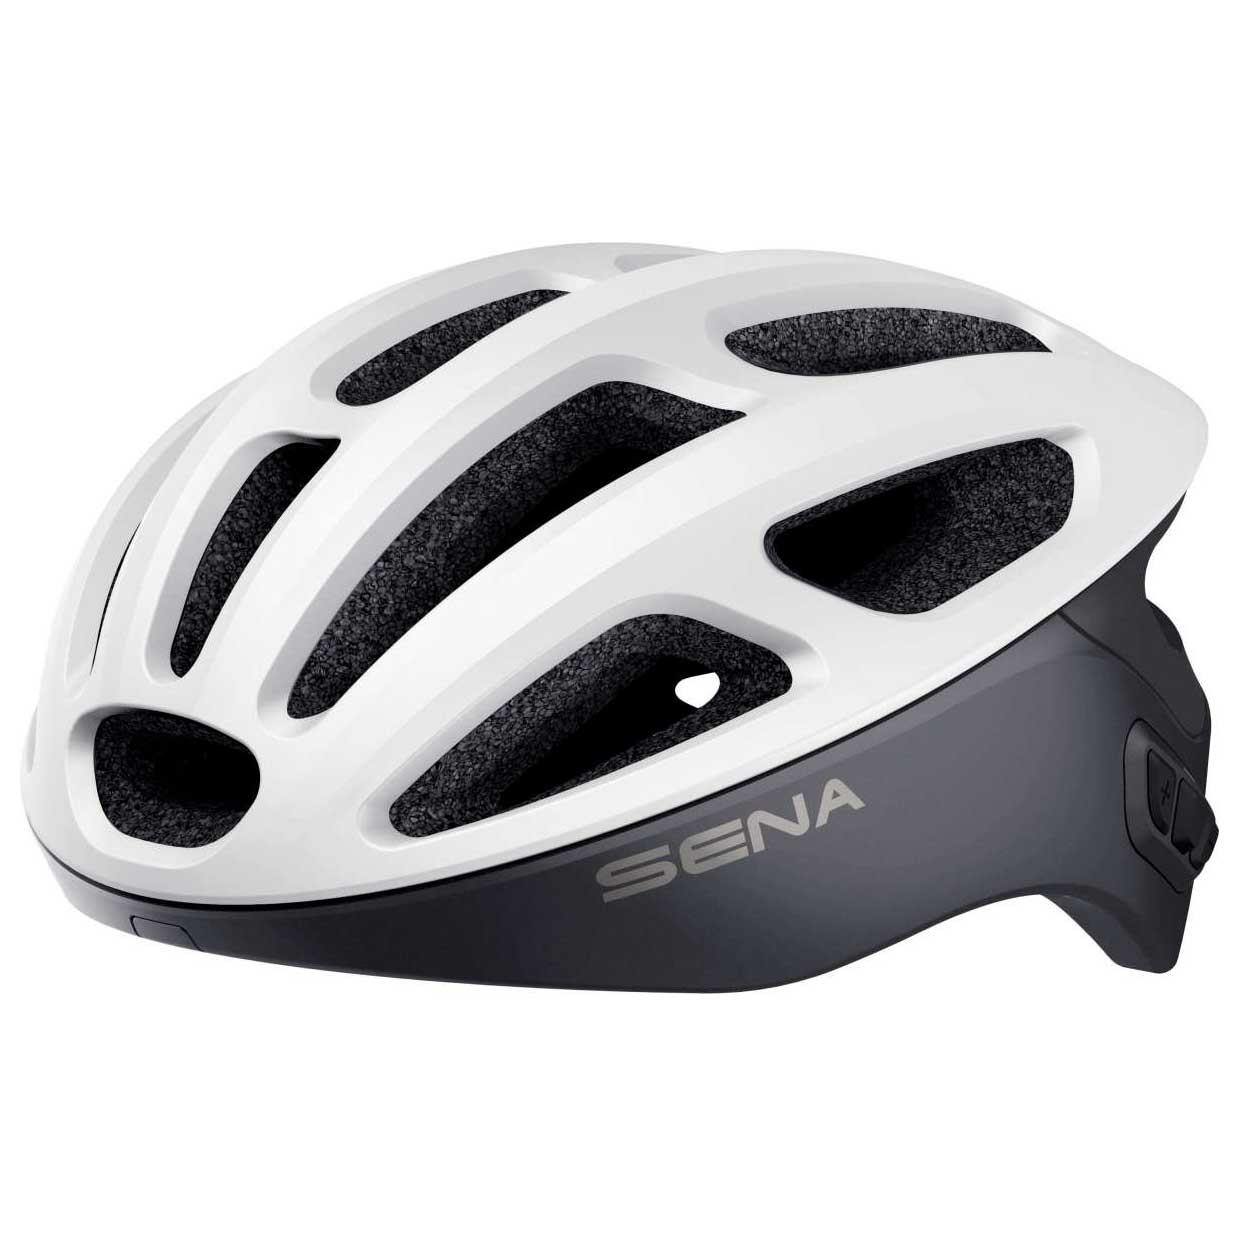 Productfoto van SENA R1 Smart Cycling Helmet - without FM Radio - Matte White